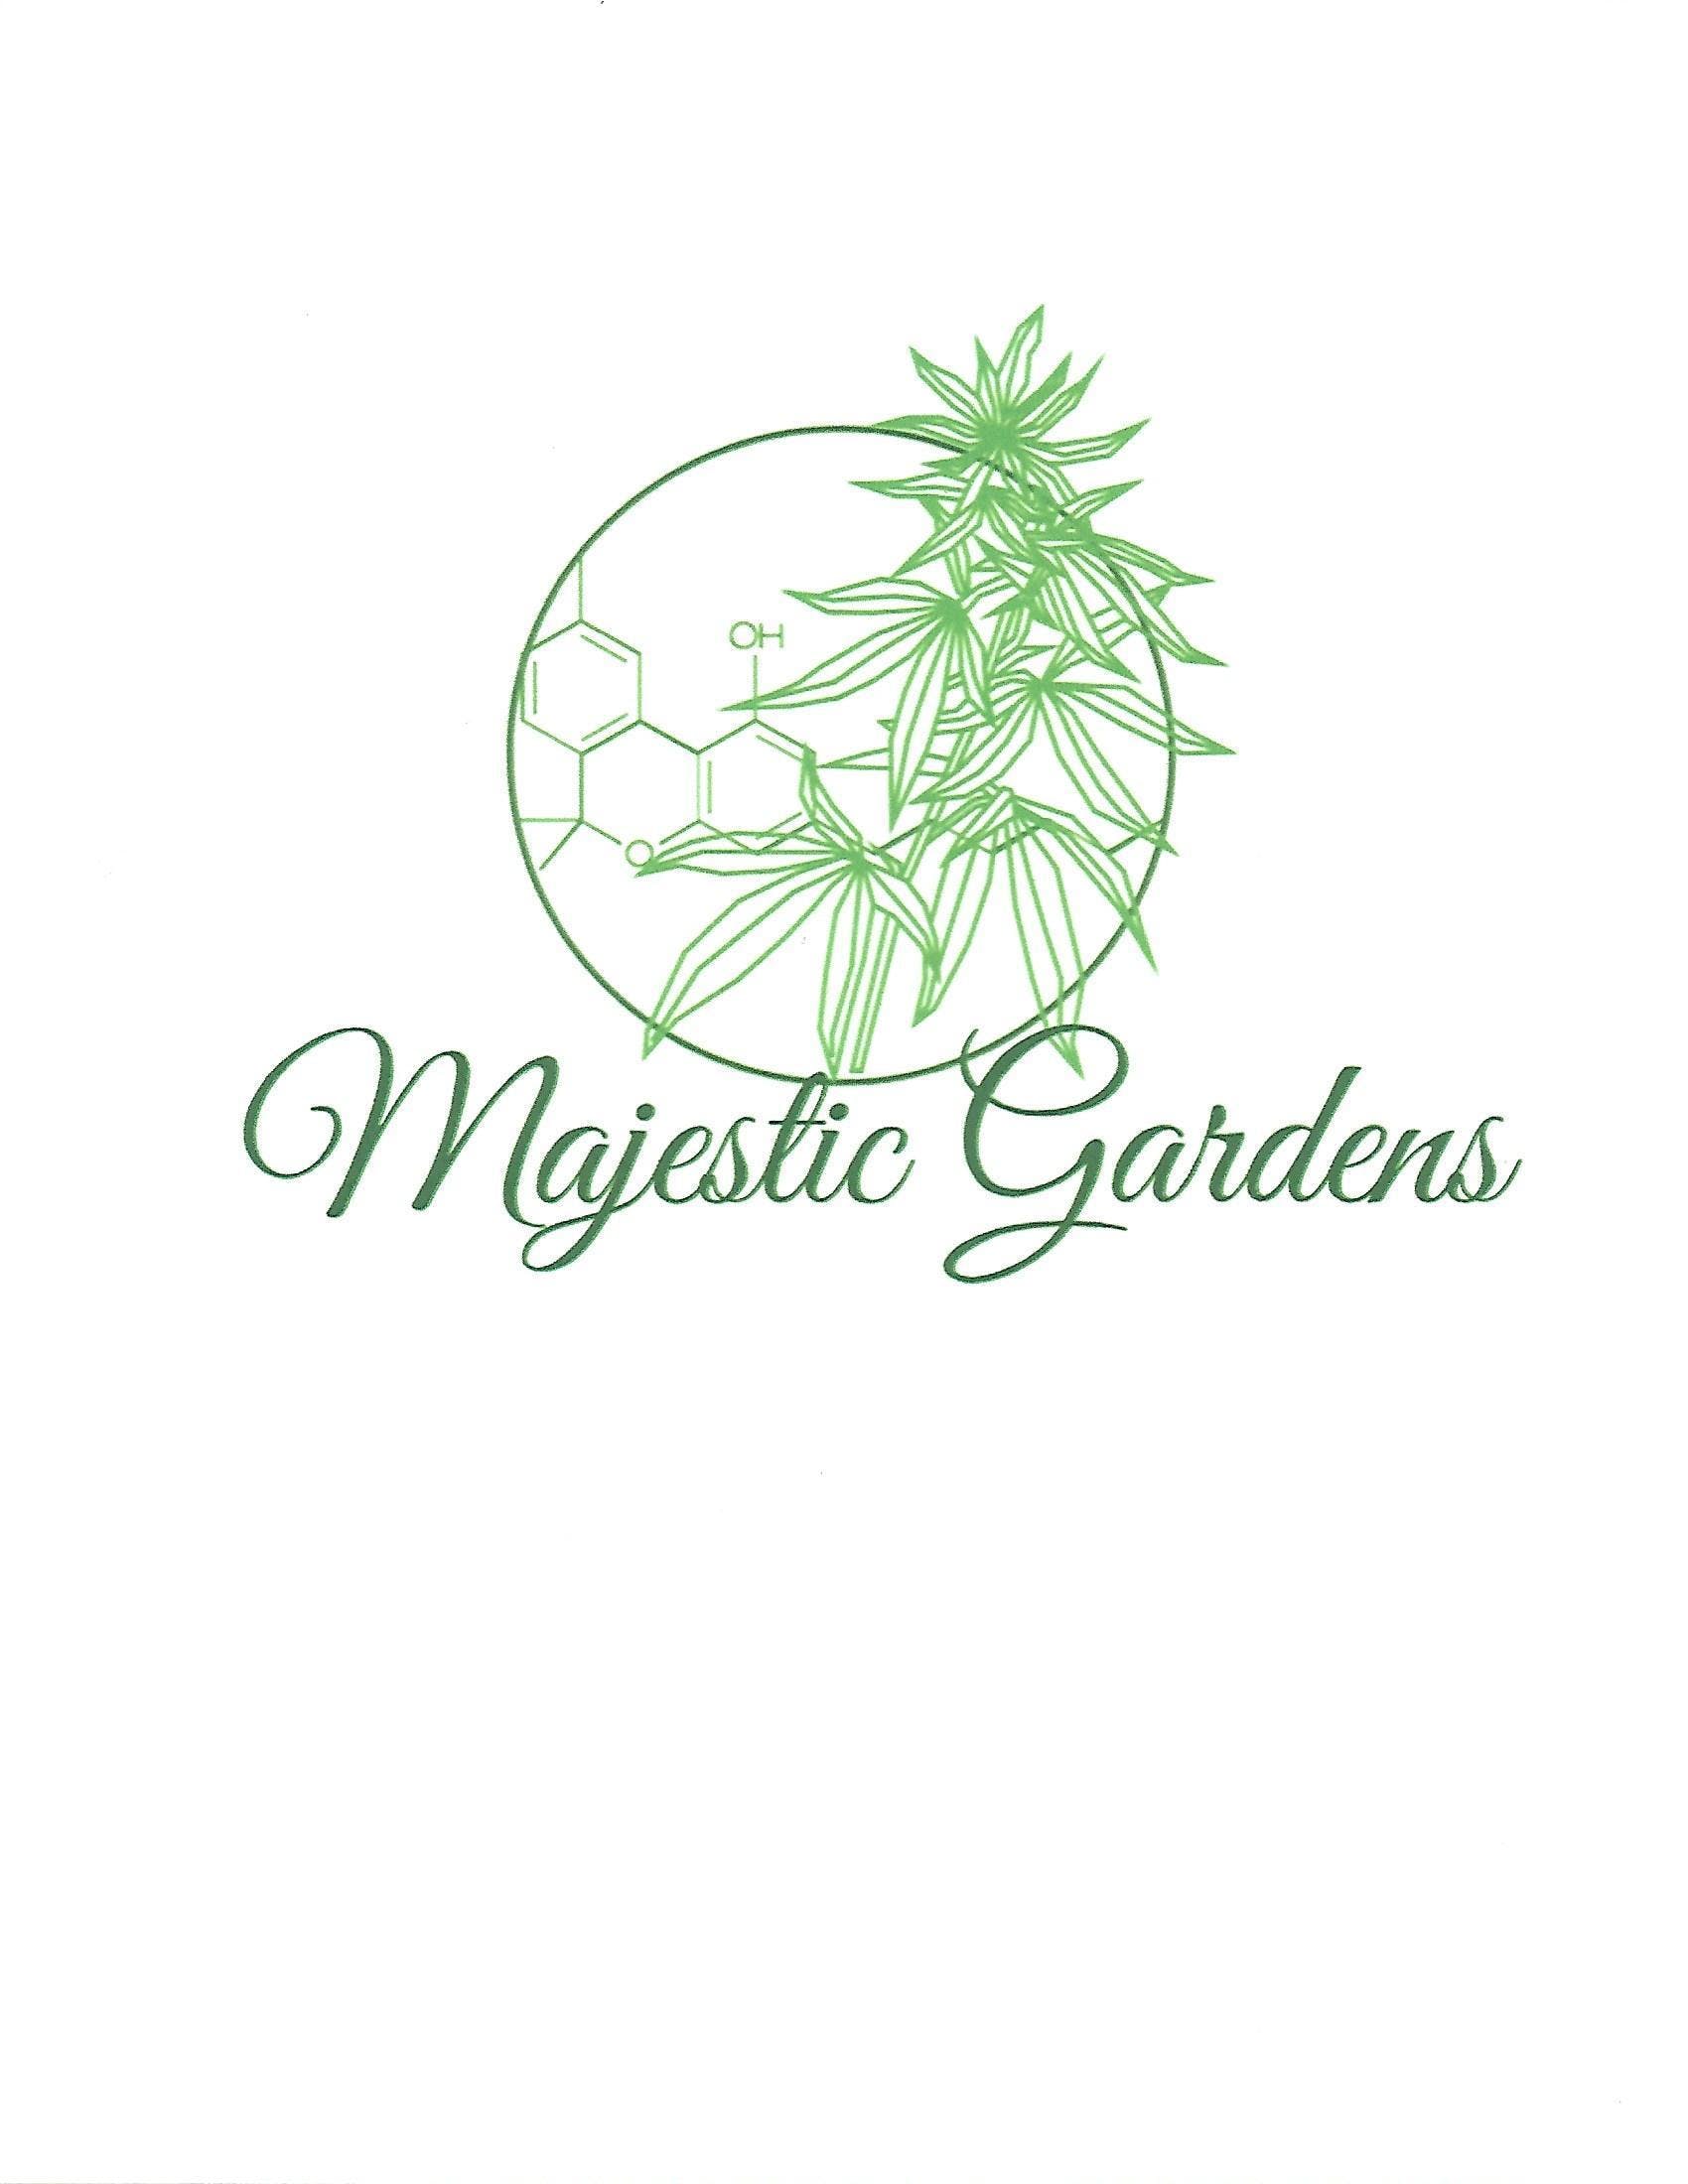 Majestic Gardens - Medical Marijuana Doctors - Cannabizme.com